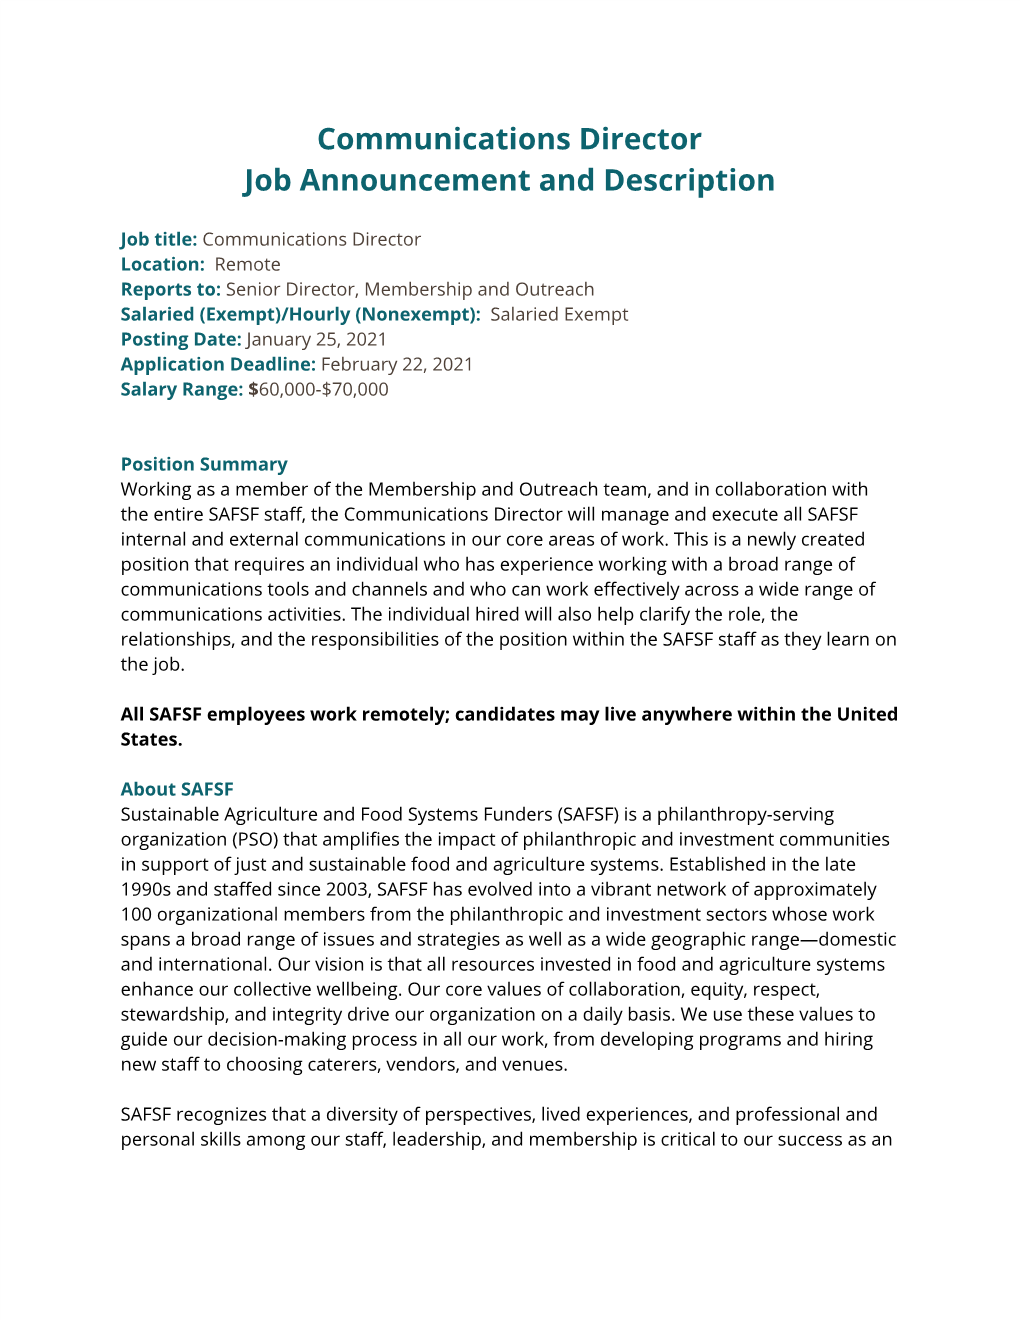 Communications Director Job Announcement and Description